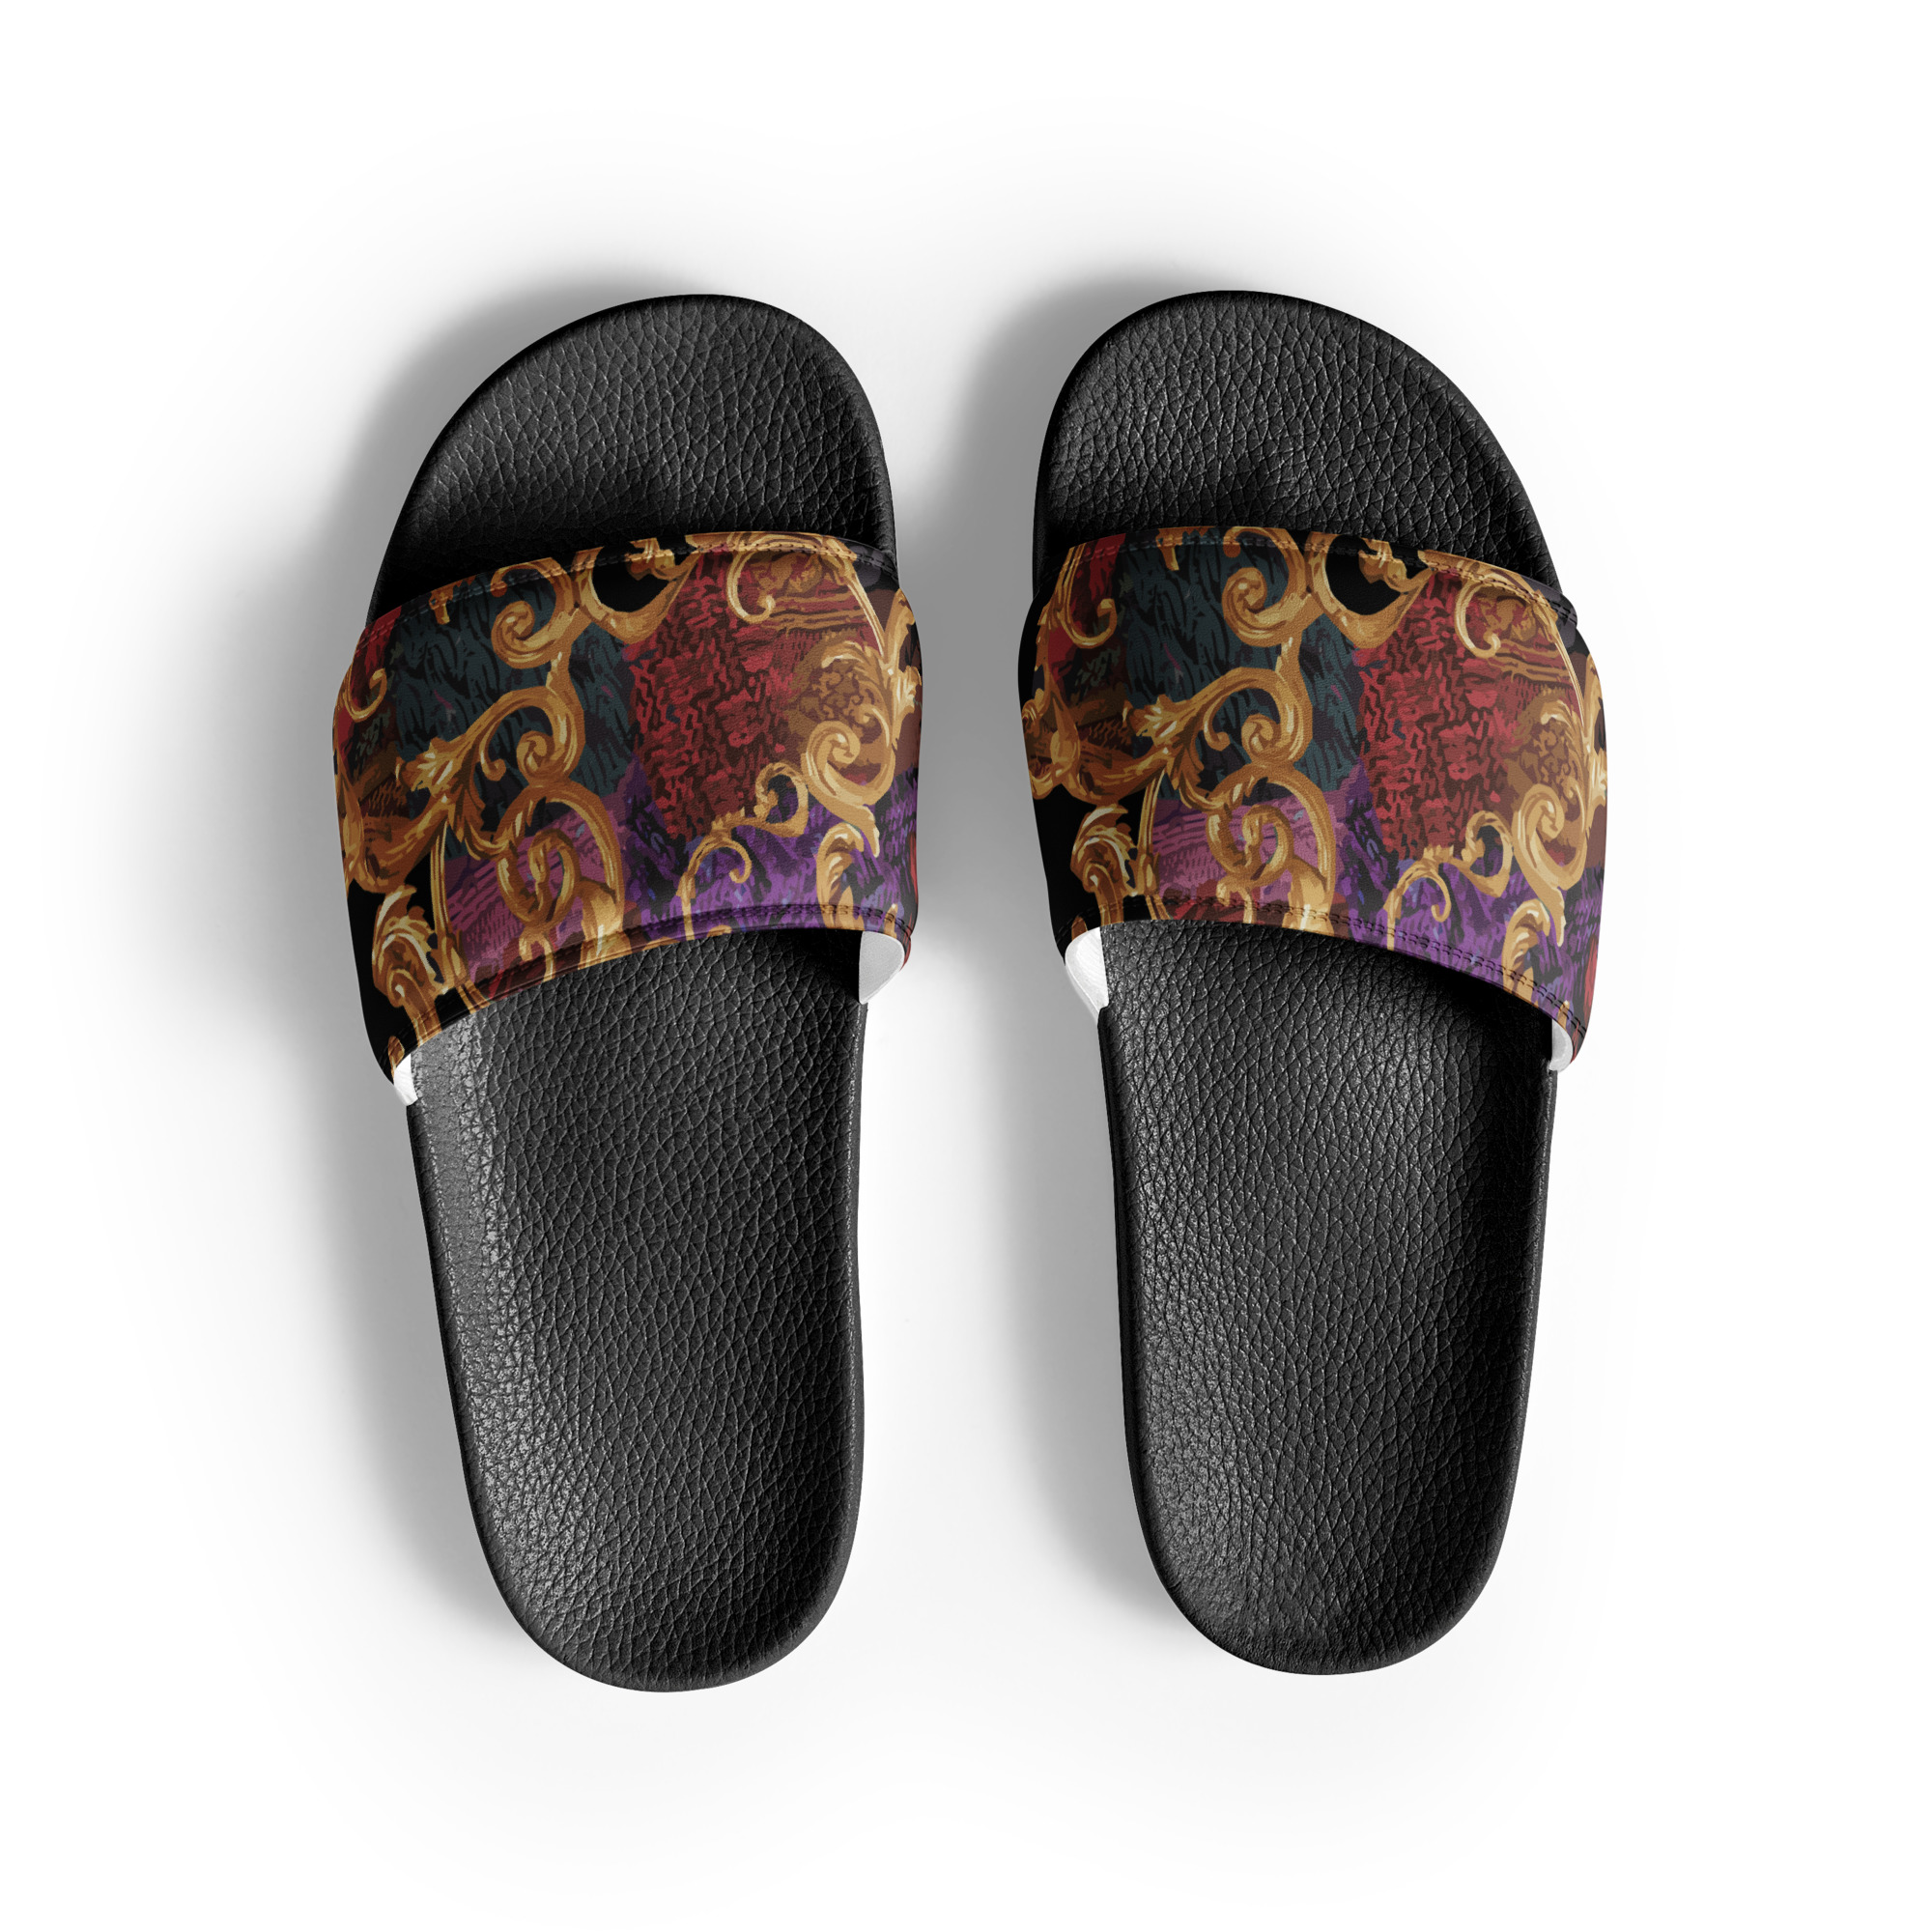 ugg slippers | jordan 4 | nikes | heydude | famousfootwear | shoes